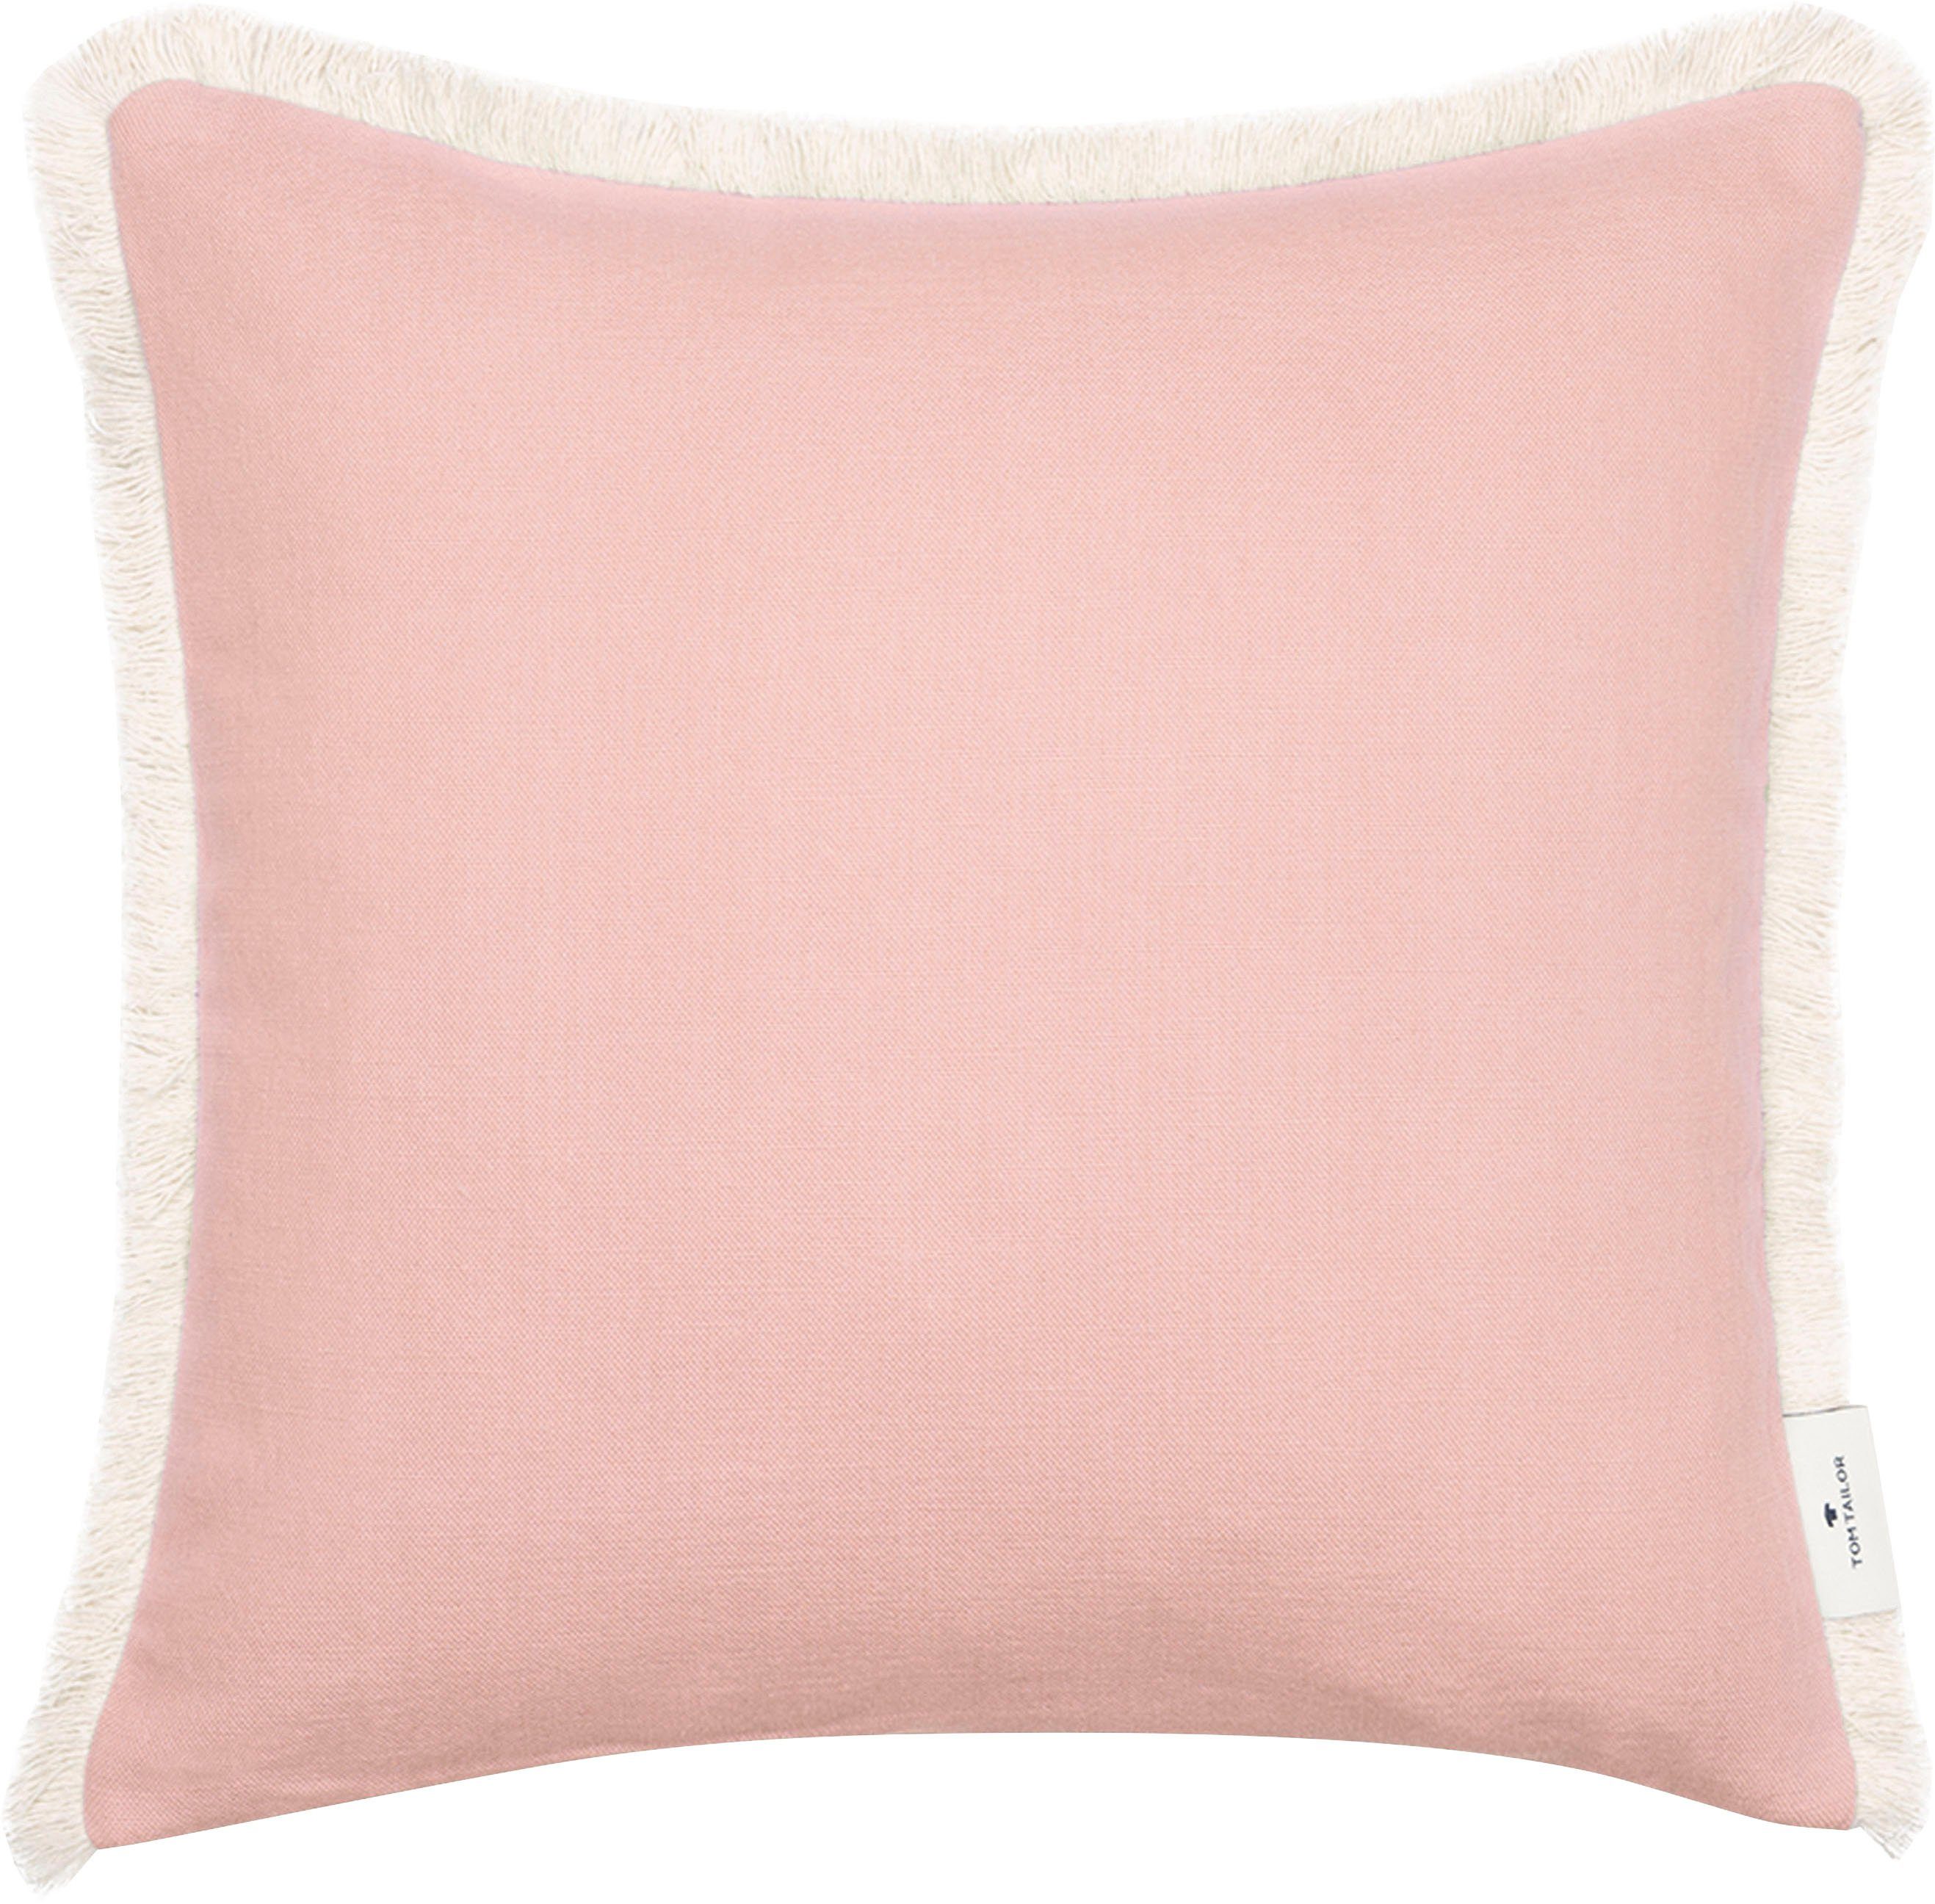 TOM TAILOR HOME Dekokissen Fringed Cotton, mit naturfarbenen Fransensaum, Kissenhülle ohne Füllung, 1 Stück rosa